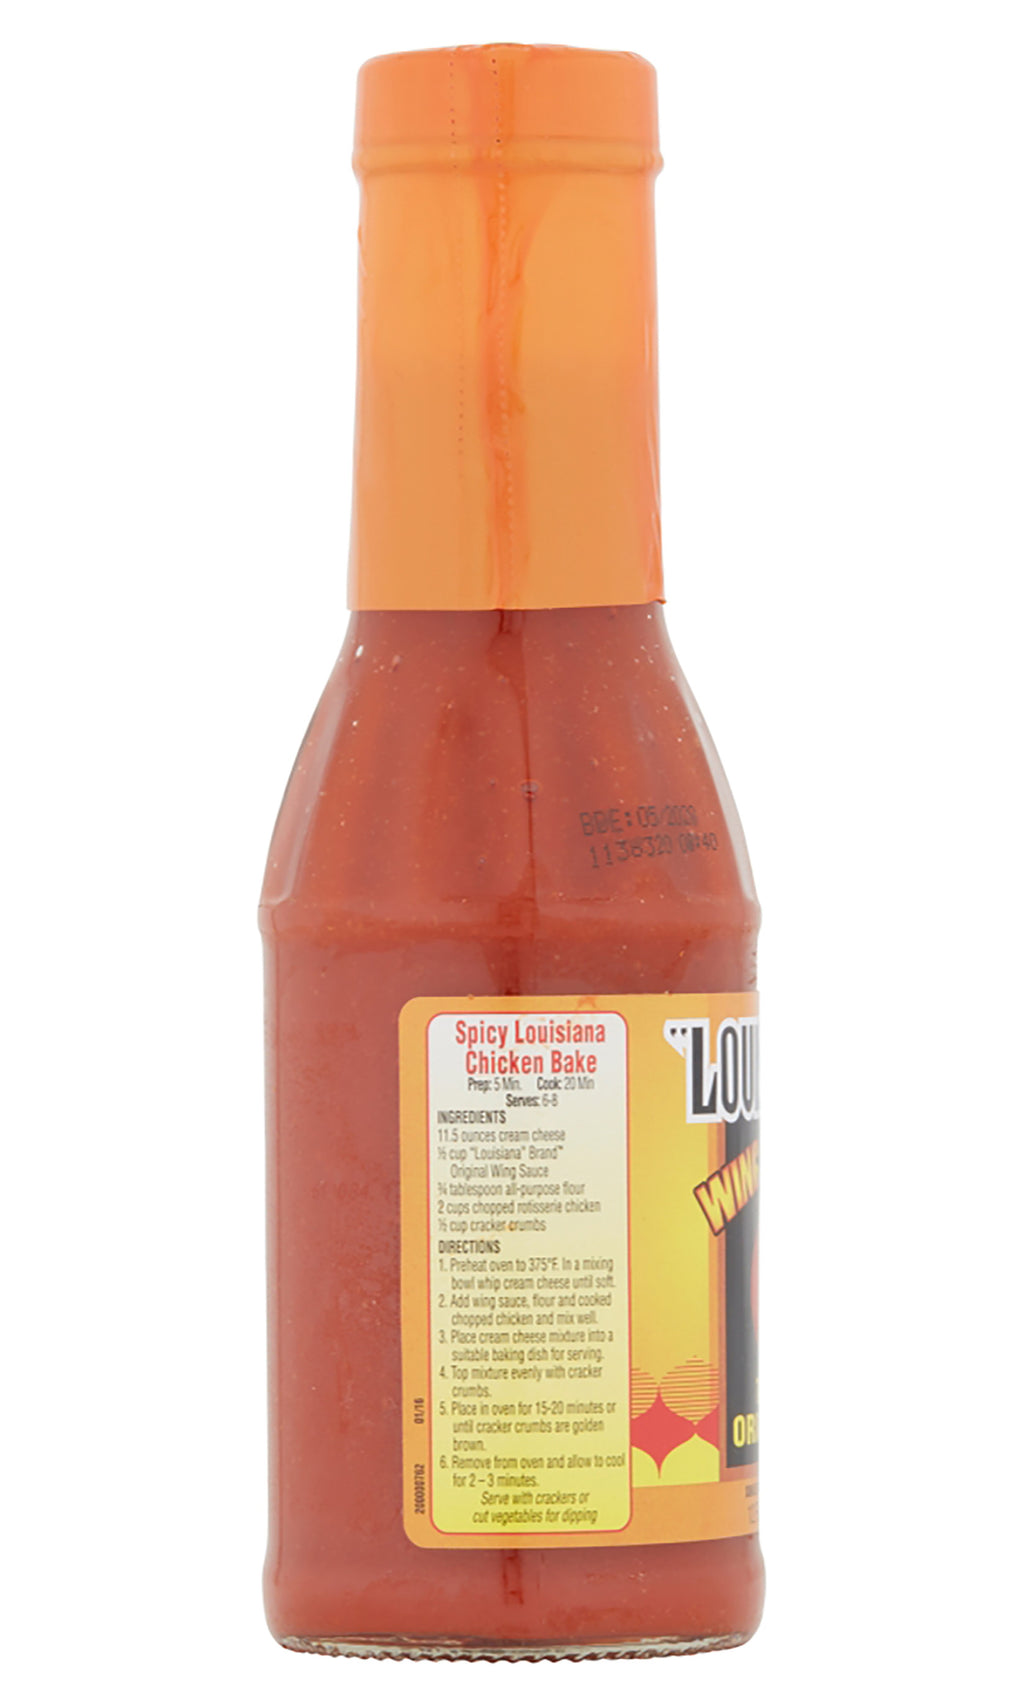  The Original Louisiana Supreme Chicken Wing Sauce 12 oz Bottle  : Grocery & Gourmet Food